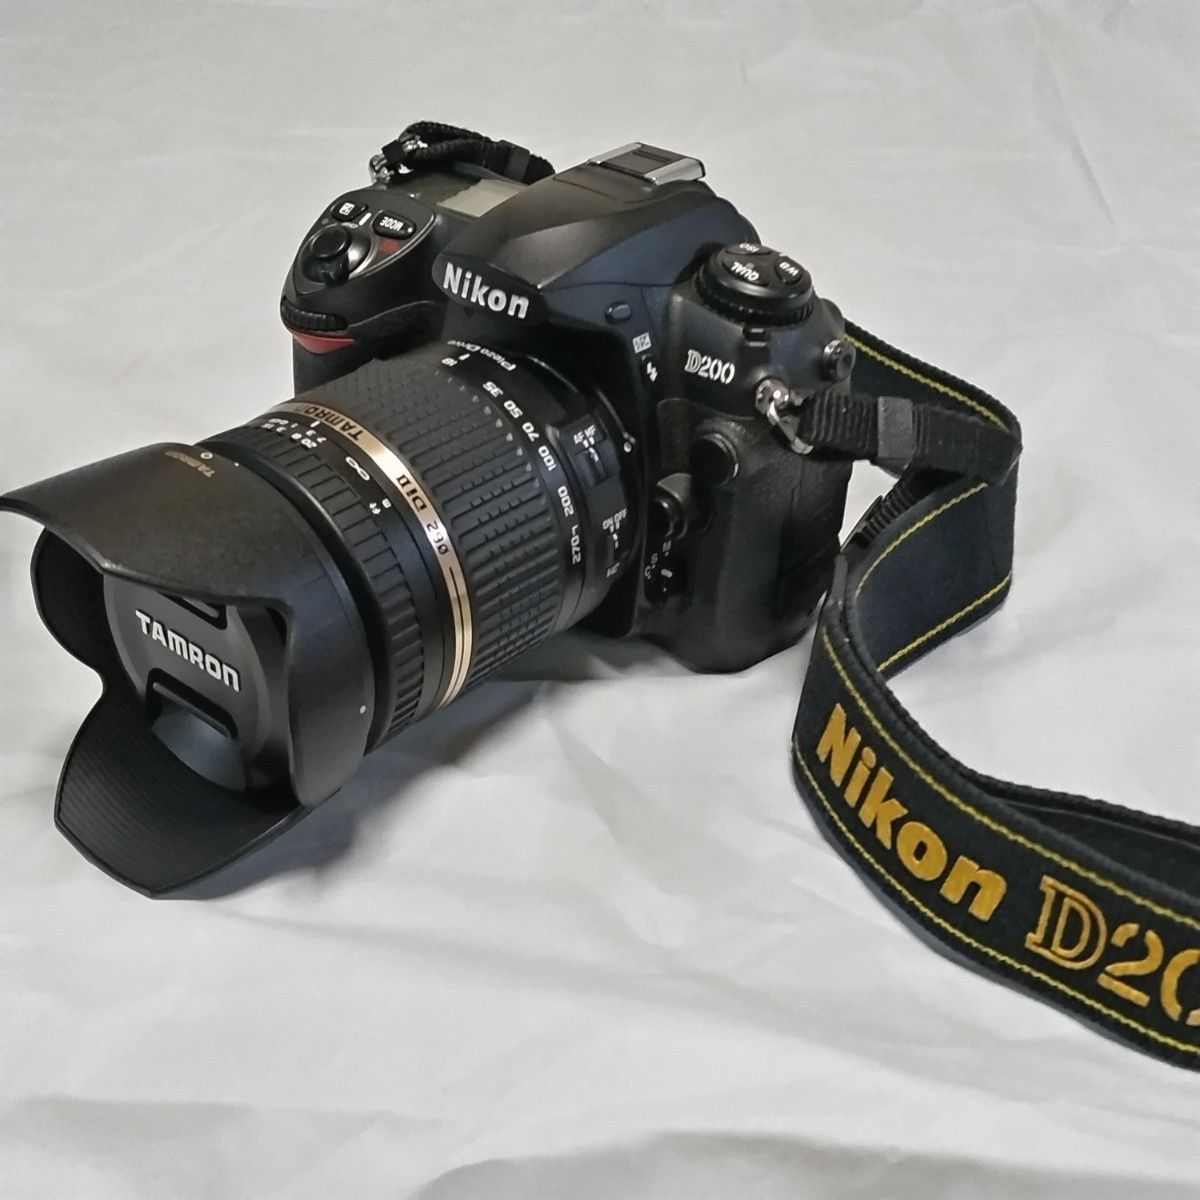 Nikon d200 高倍率ズームレンズセット